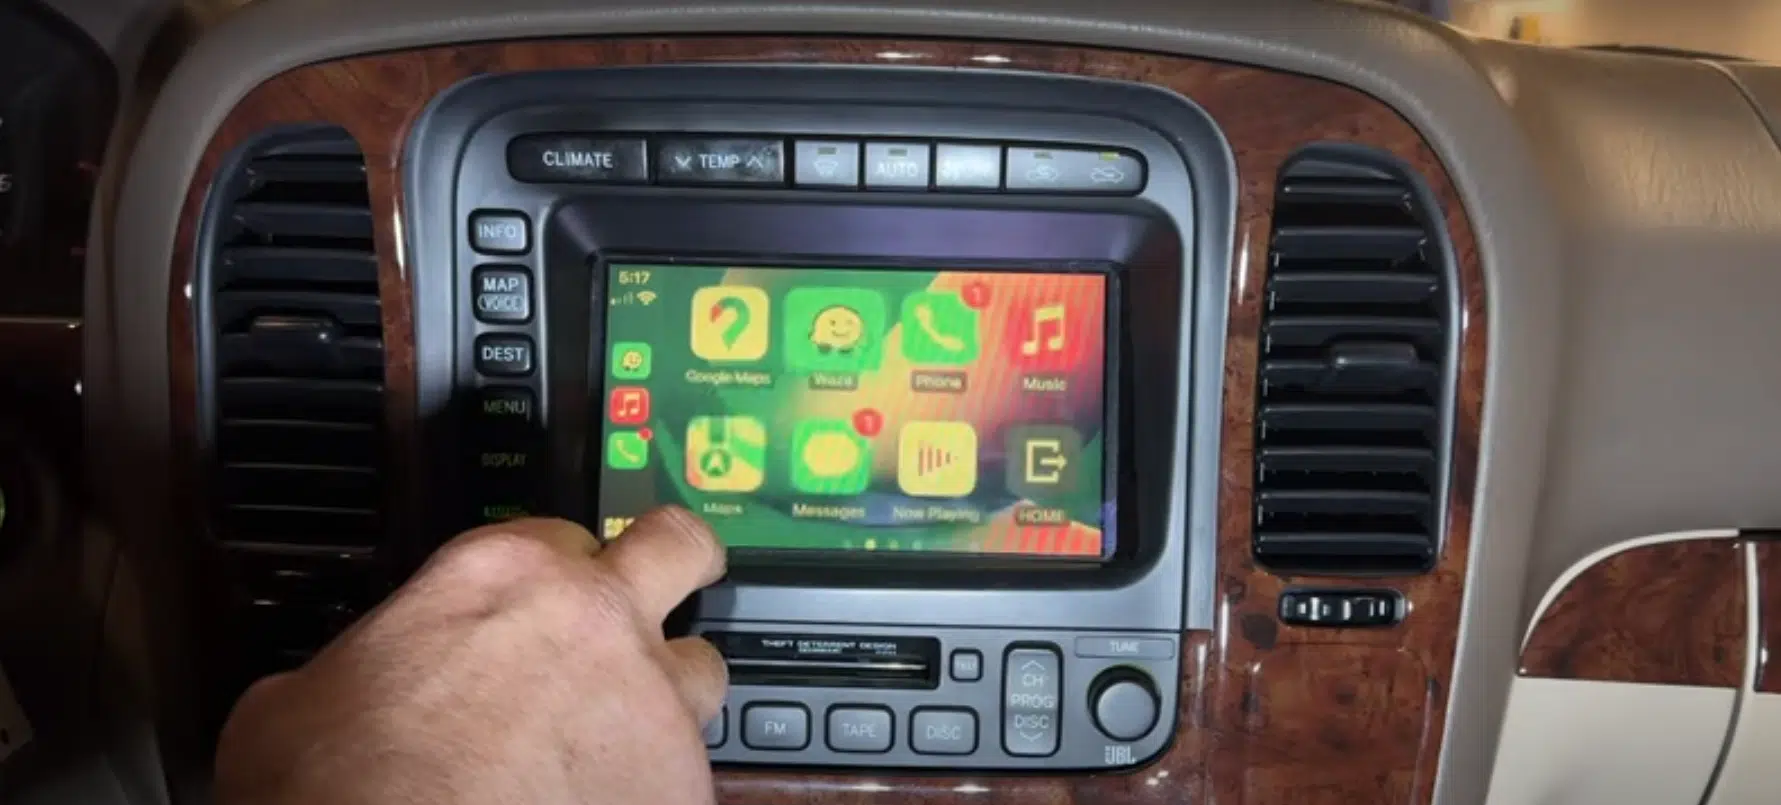 Old Toyota Land Cruiser can still run Apple CarPlay on its factory touchscreen